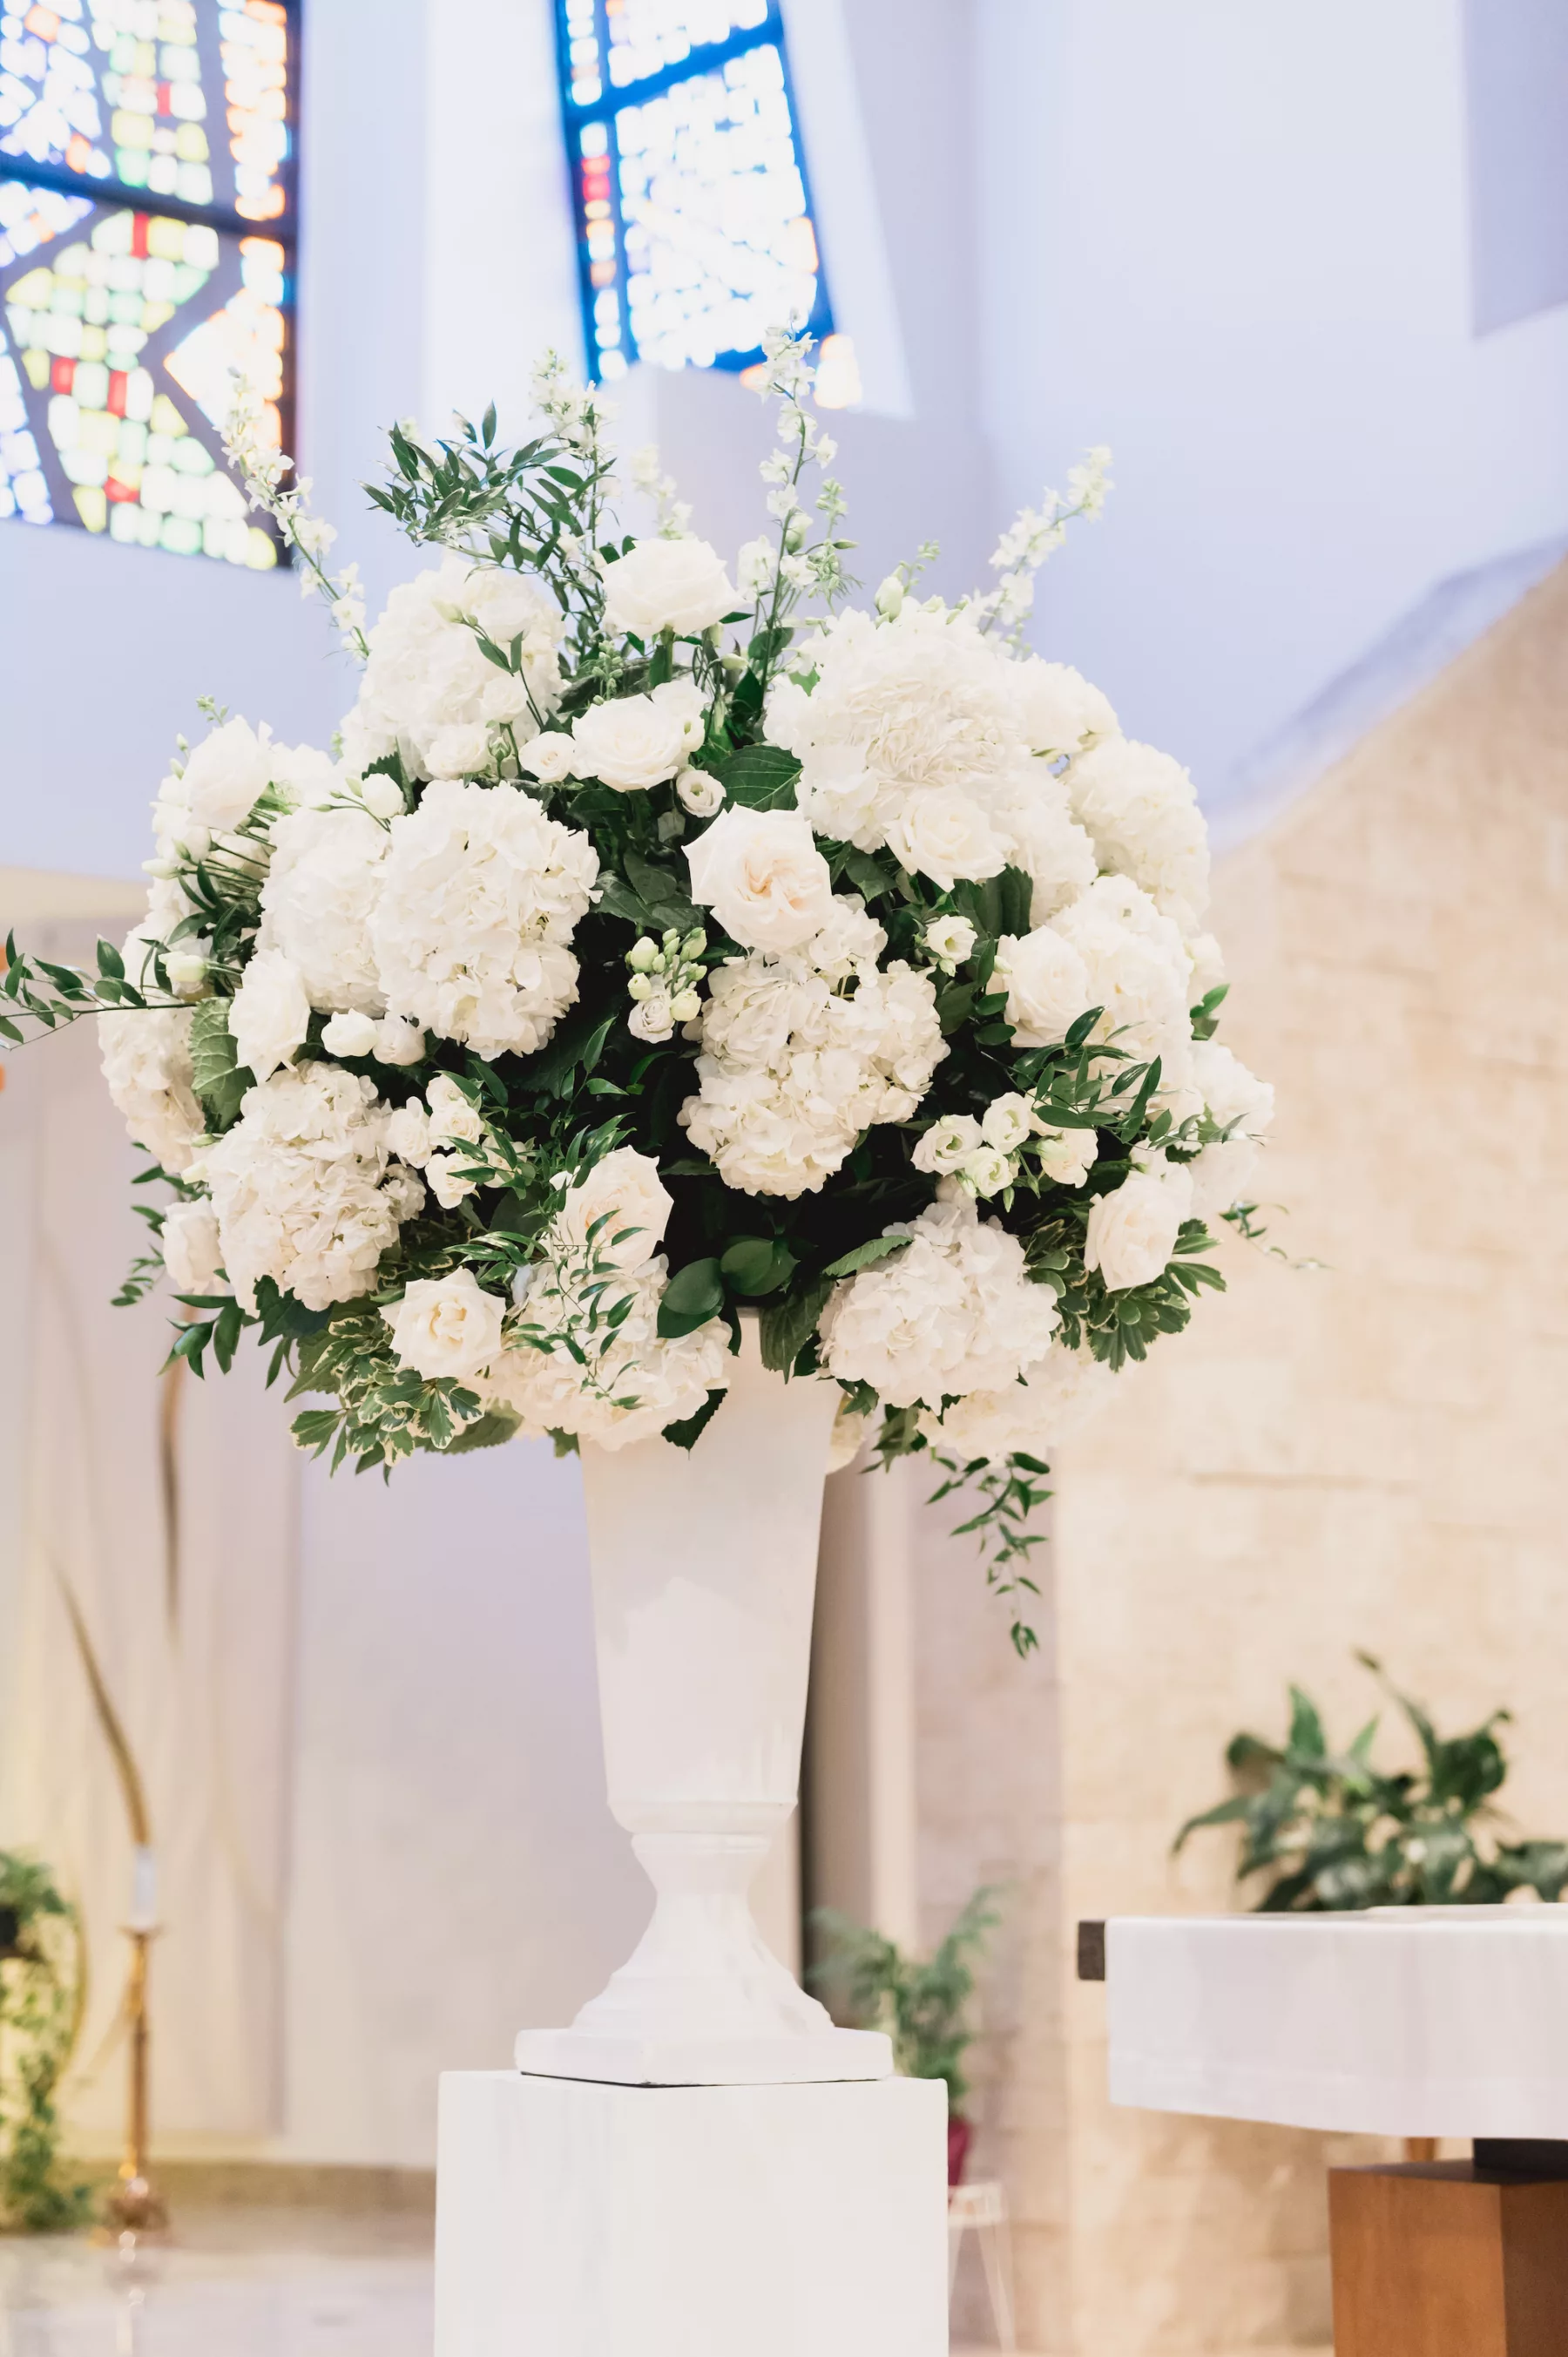 Elegant Spring White Catholic Wedding Ceremony Decor Ideas | White Hydrangeas, Roses, and Greenery with Tall Glass Vase | Tampa Bay Florist Bruce Wayne Florals